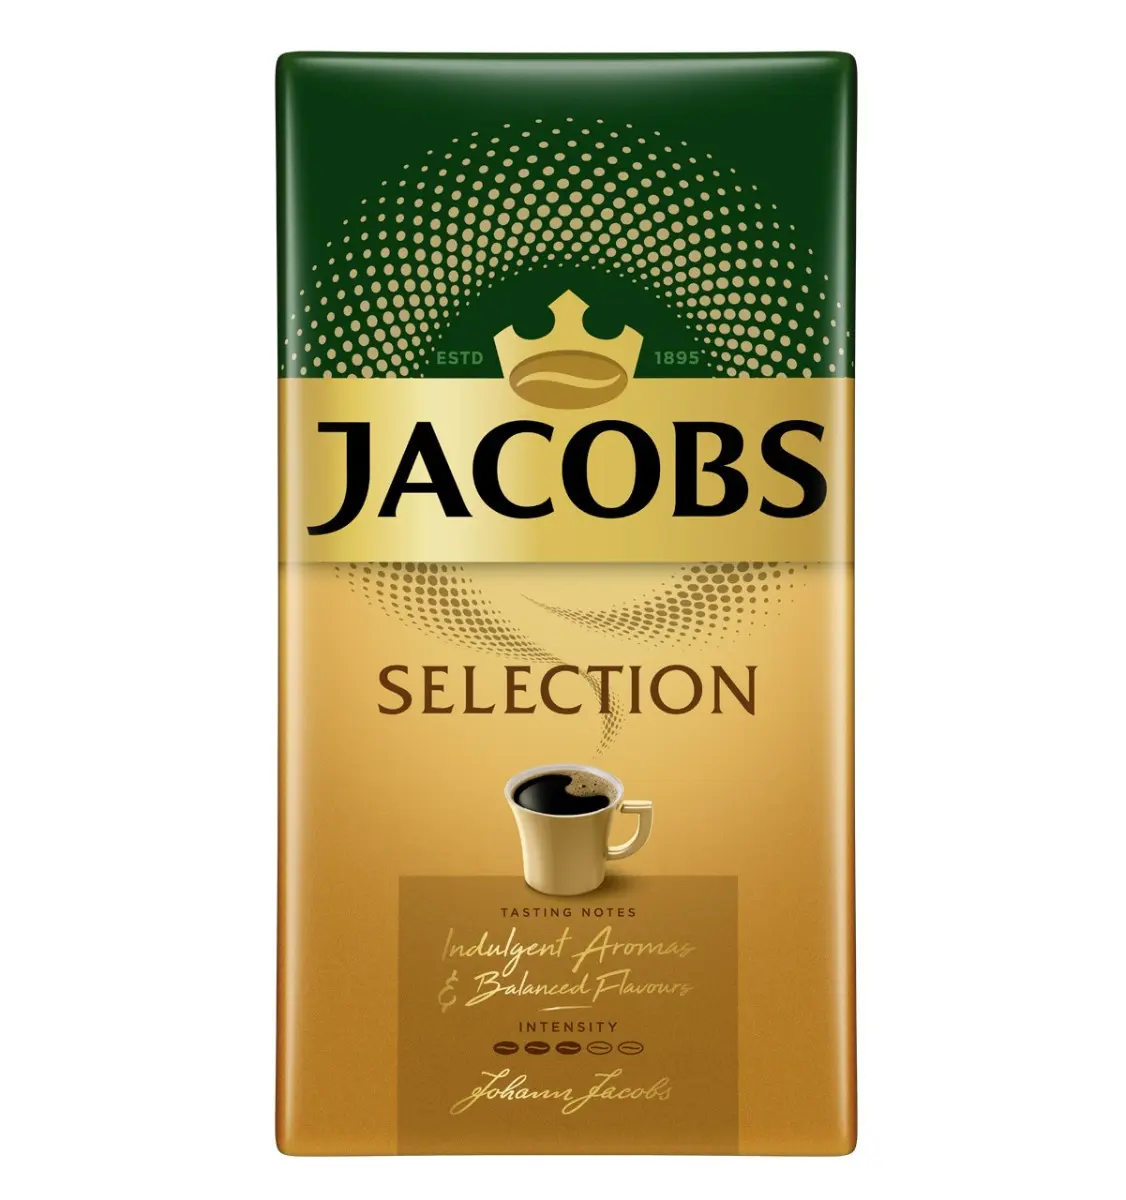 Cafea macinata Jacobs Selection, 250 g